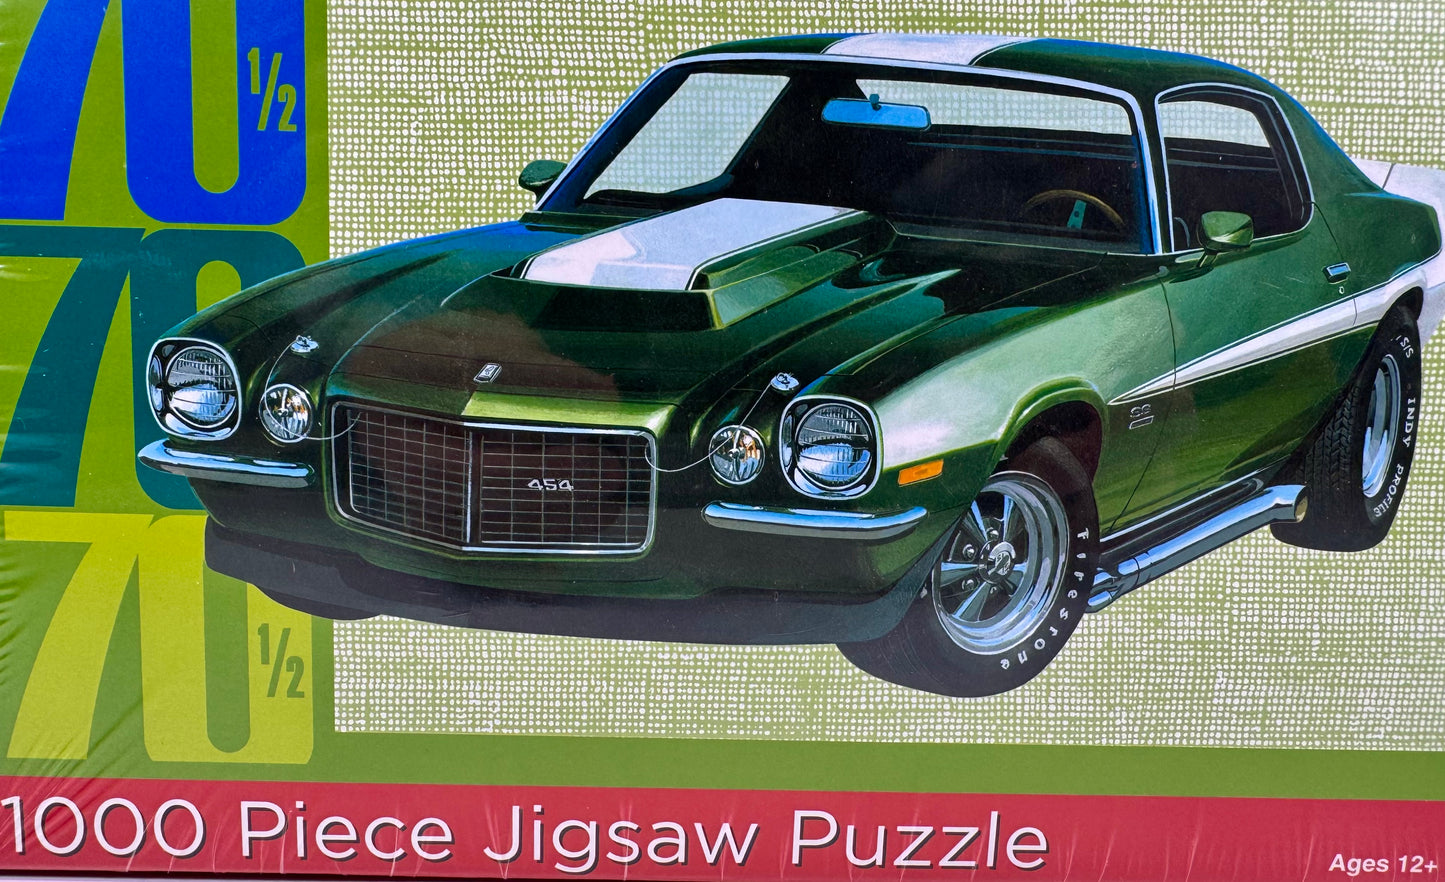 AMT 1970 1/2 Baldwin Motion Camaro 1000 Piece Jigsaw Puzzle AWAC009/12 Factory Sealed Box